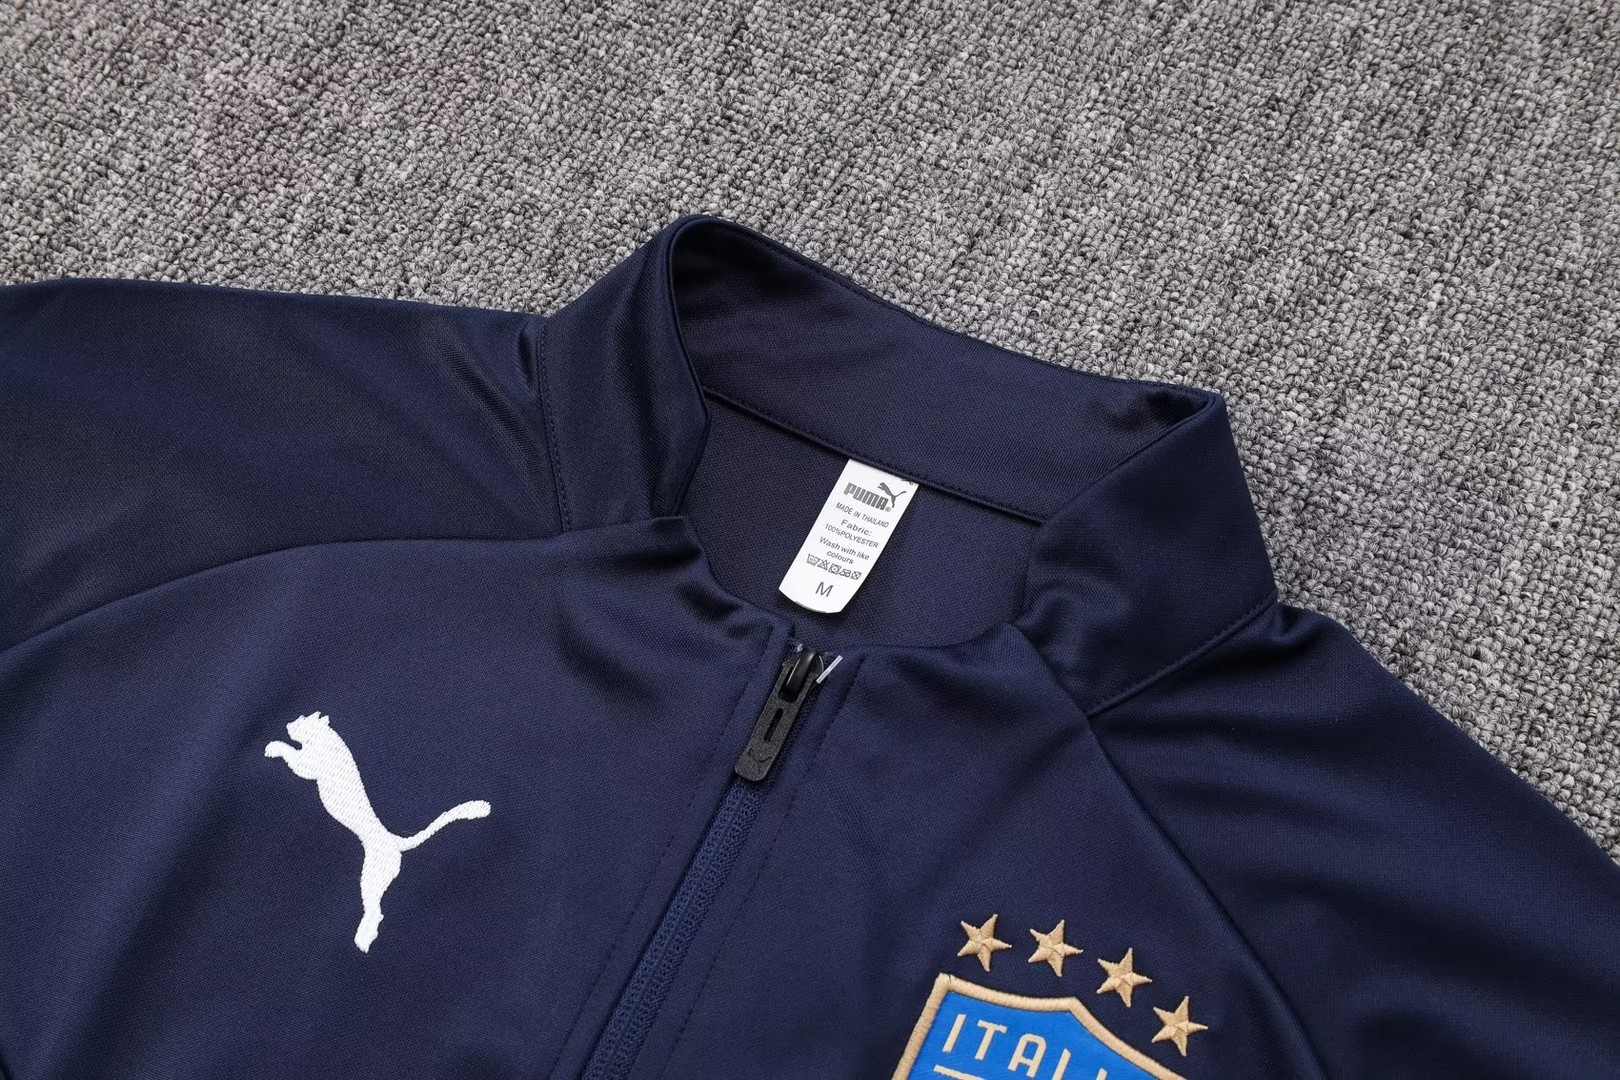 Italy Soccer Jacket + Pants Replica Navy 2022 Mens